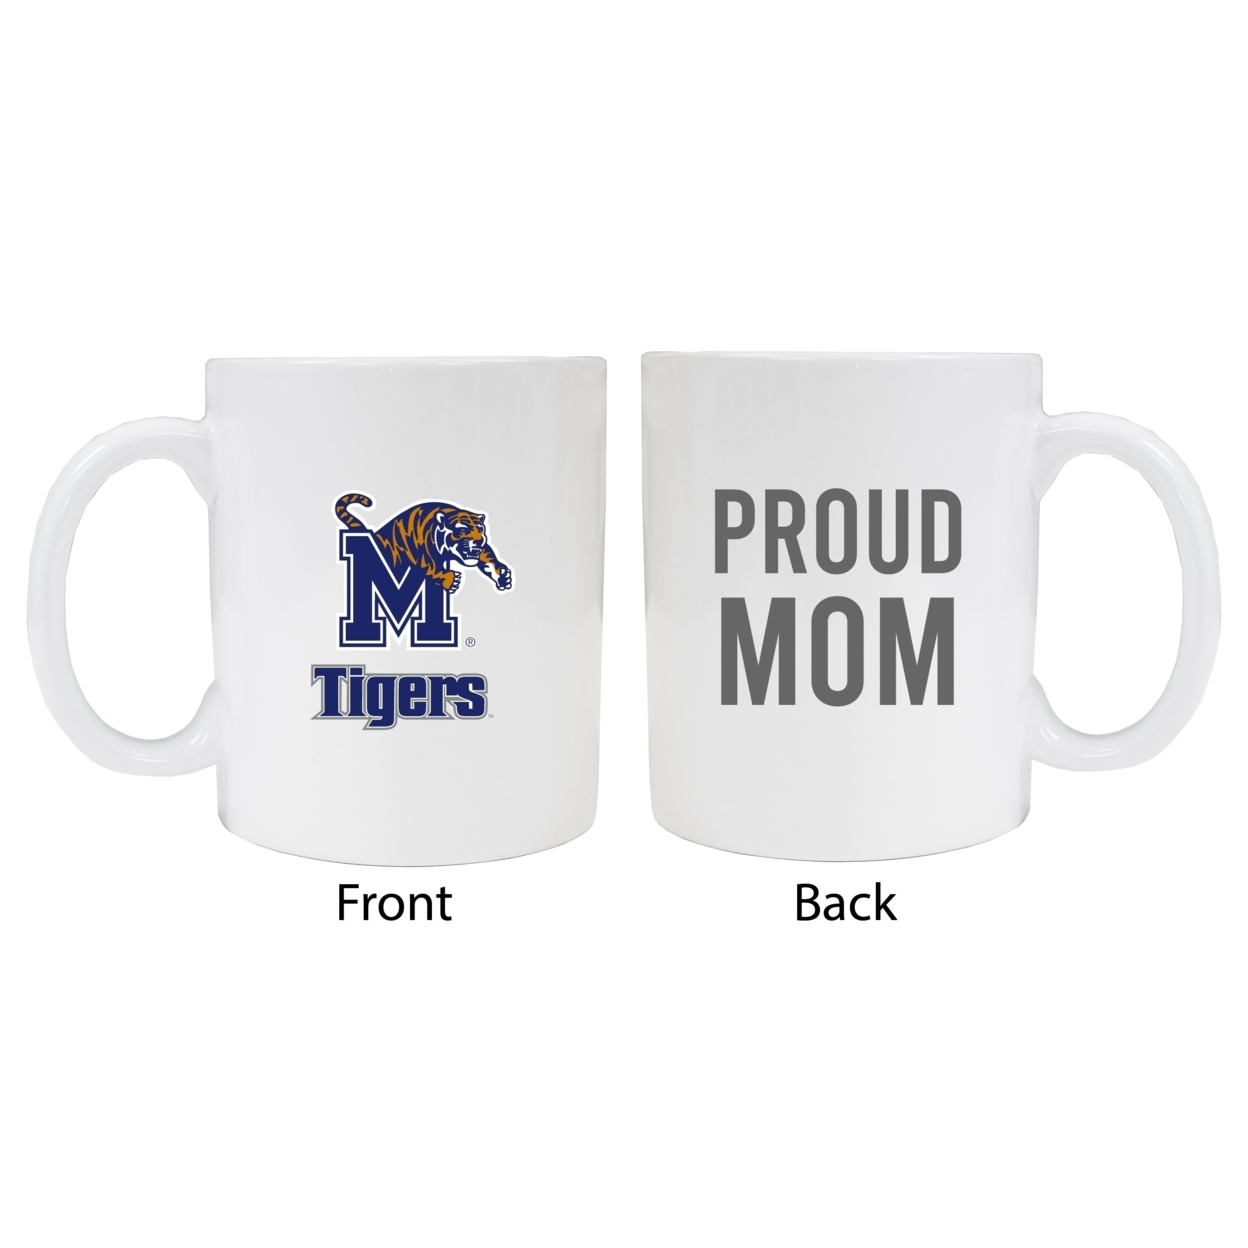 Memphis Tigers Proud Mom Ceramic Coffee Mug - White (2 Pack)